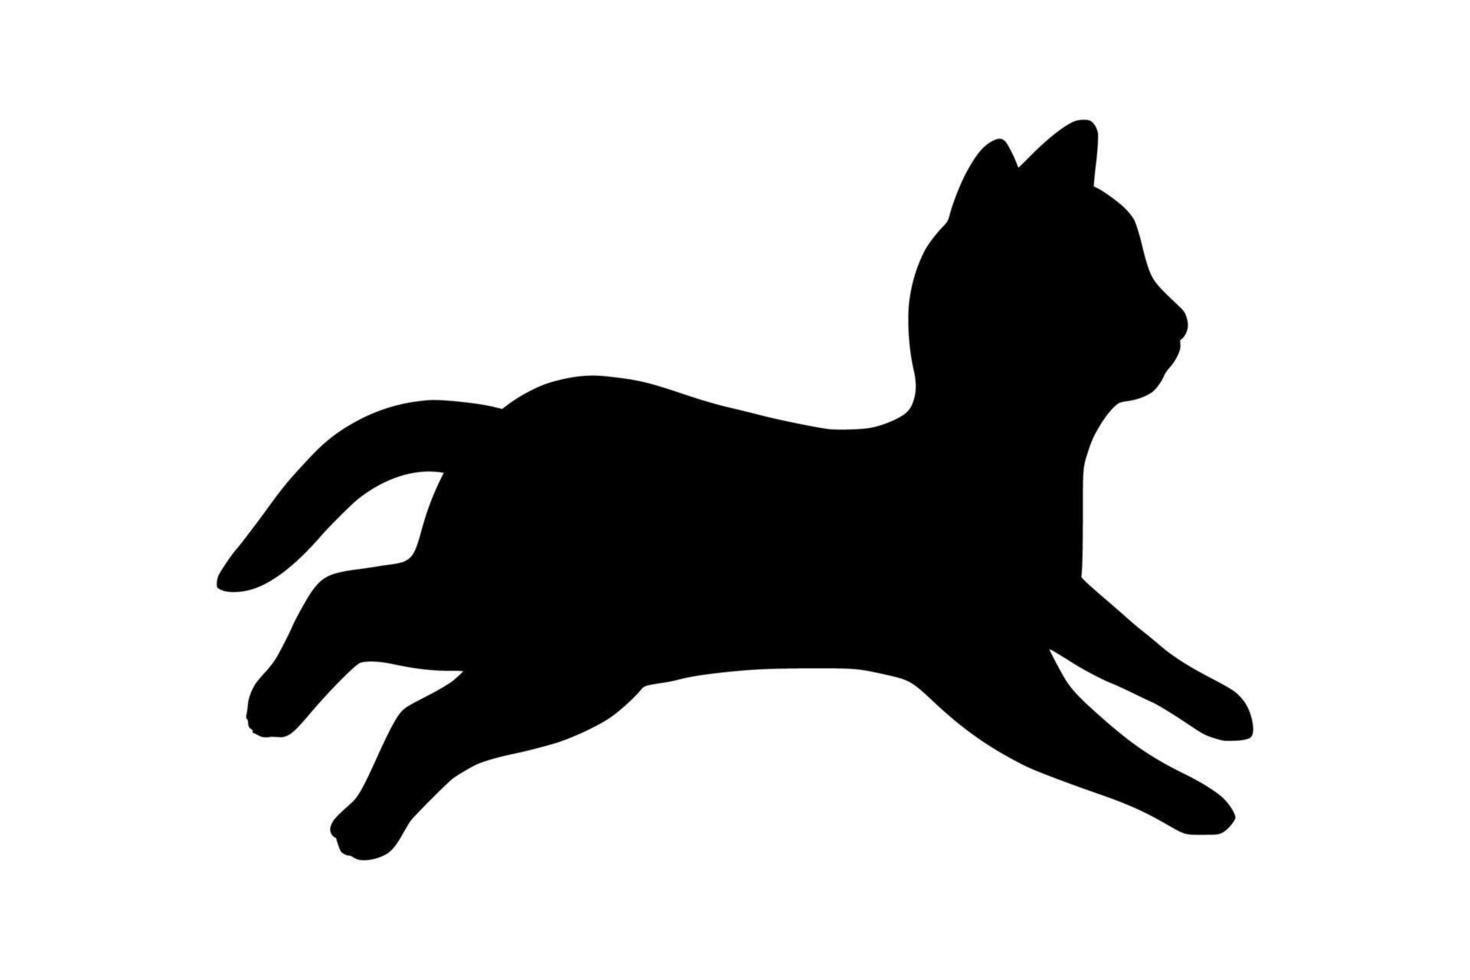 Lying cat black silhouette. Playful cat stencil. Vector illustration